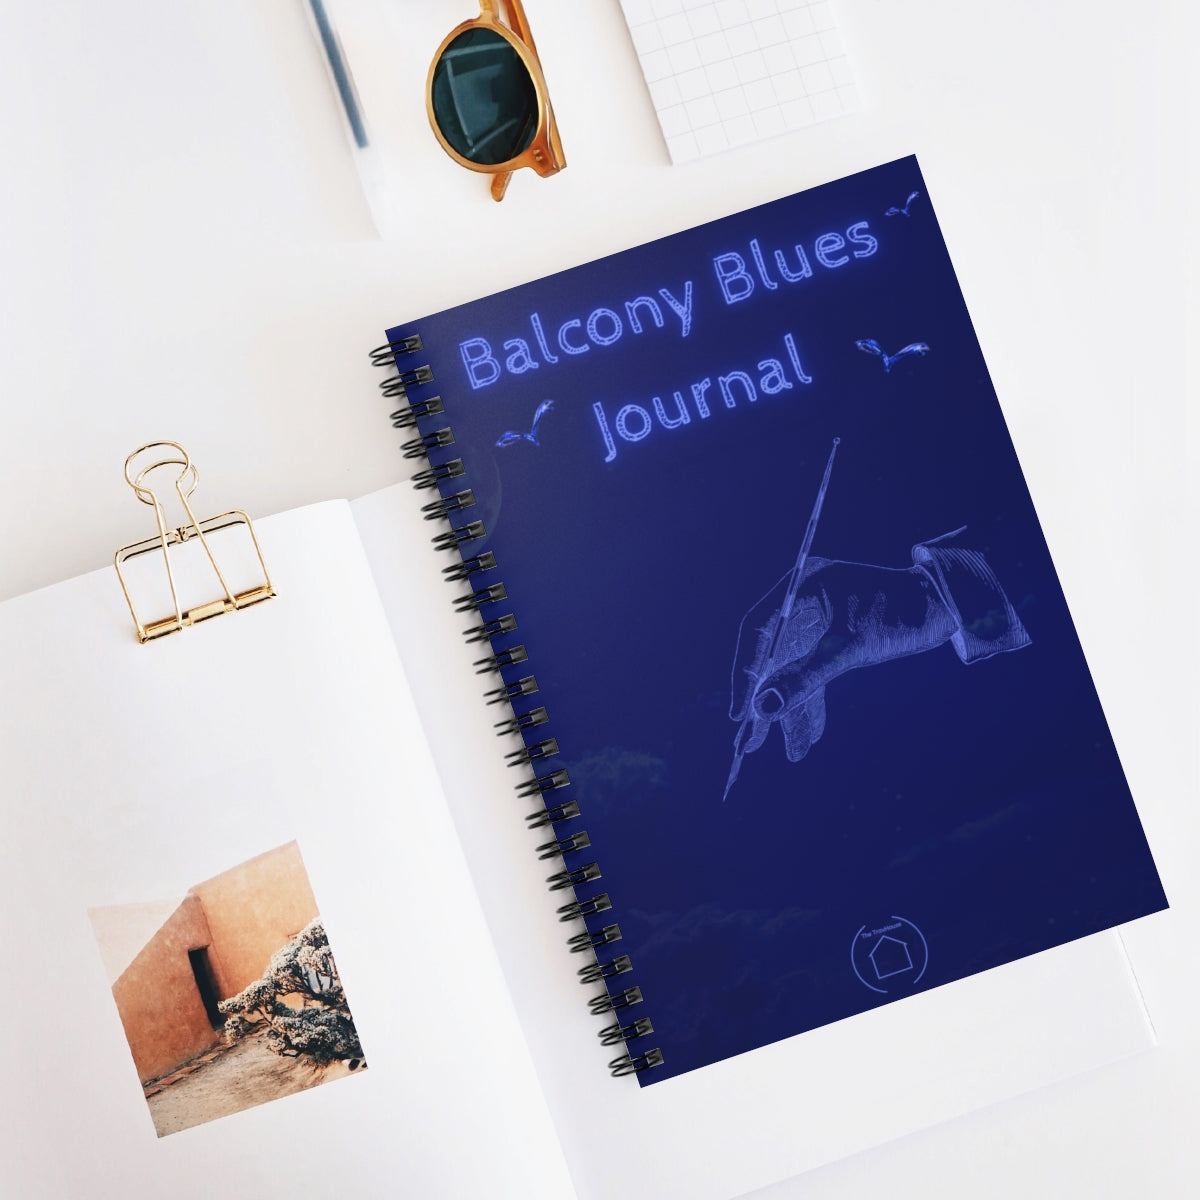 Balcony Blues Journal